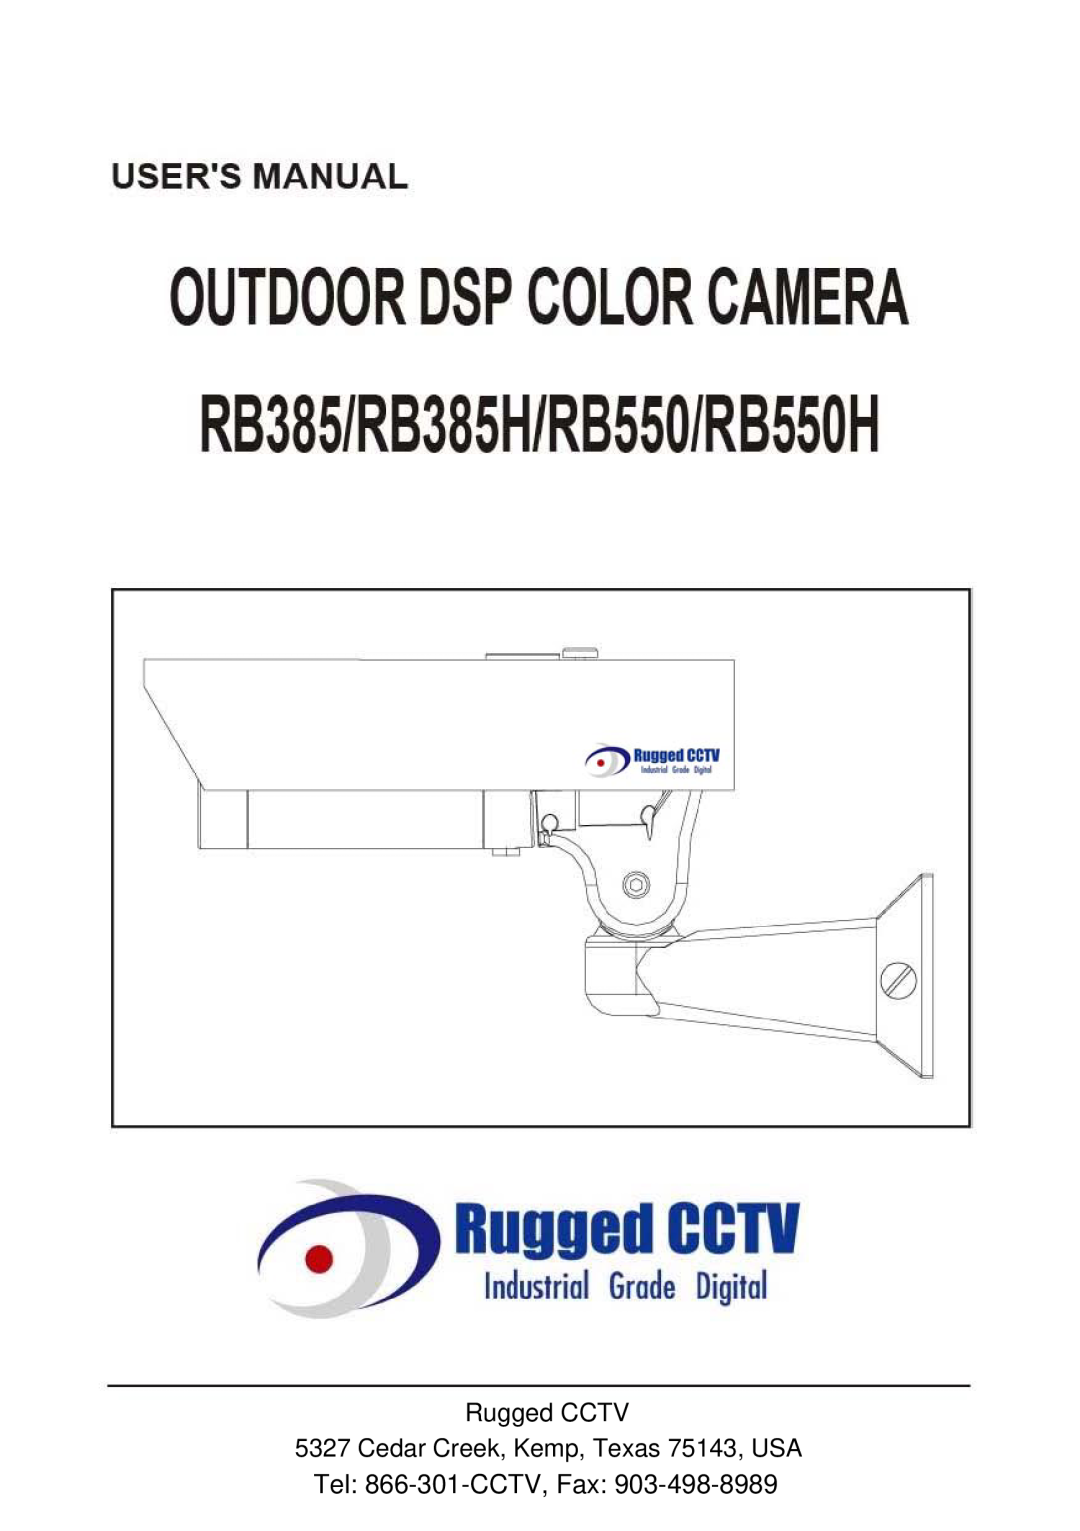 Sony RB358H, RB550H manual Tel 866-301-CCTV, Fax, Rugged CCTV 5327 Cedar Creek, Kemp, Texas 75143, USA 